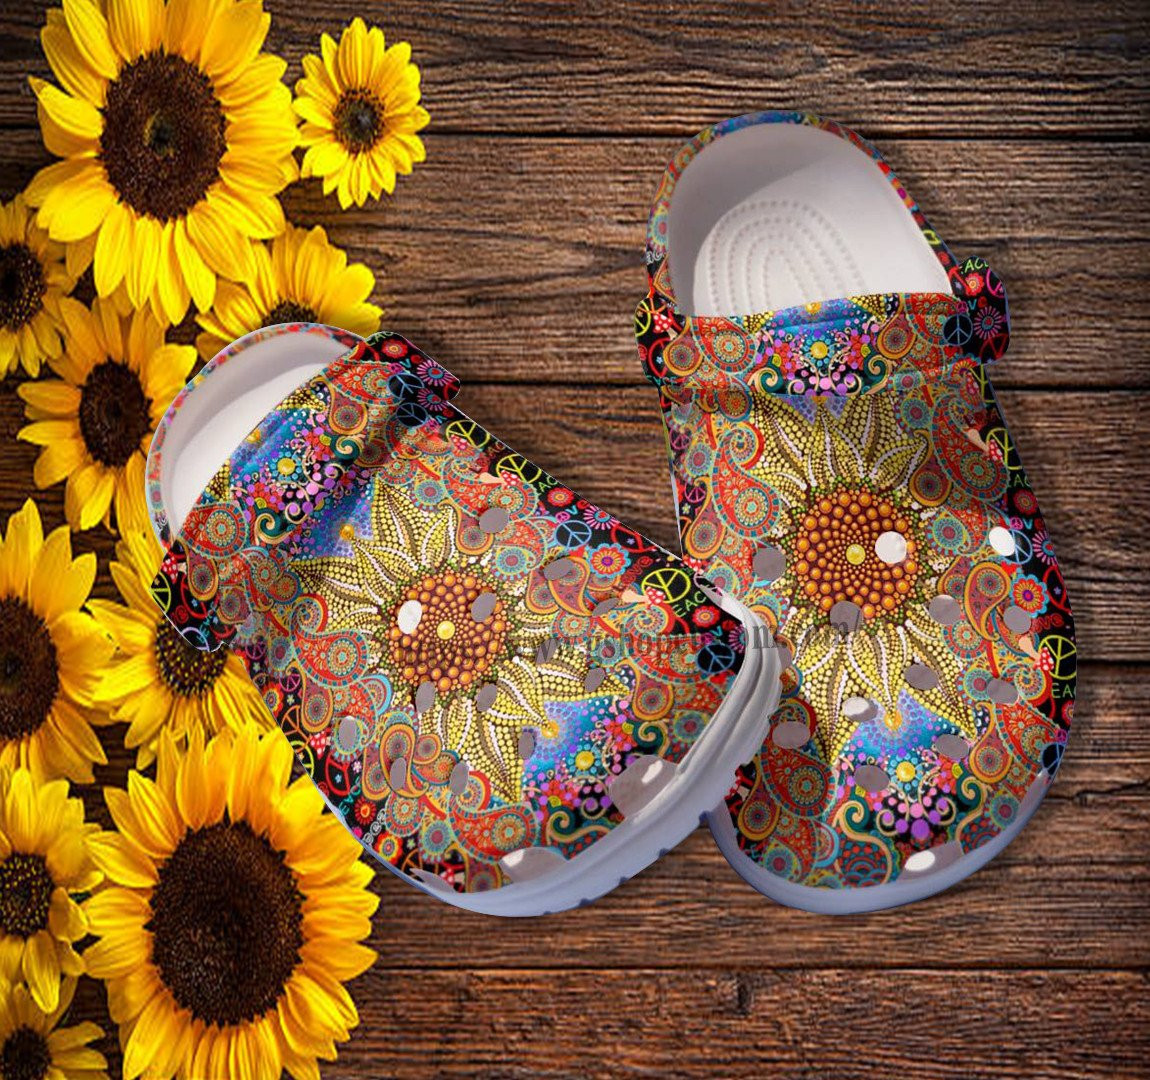 Boho Trippy Sunflower Twinkle Croc Shoes - Hippie Peace Boho Flower Shoes Croc Clogs Customize Birthday Girl